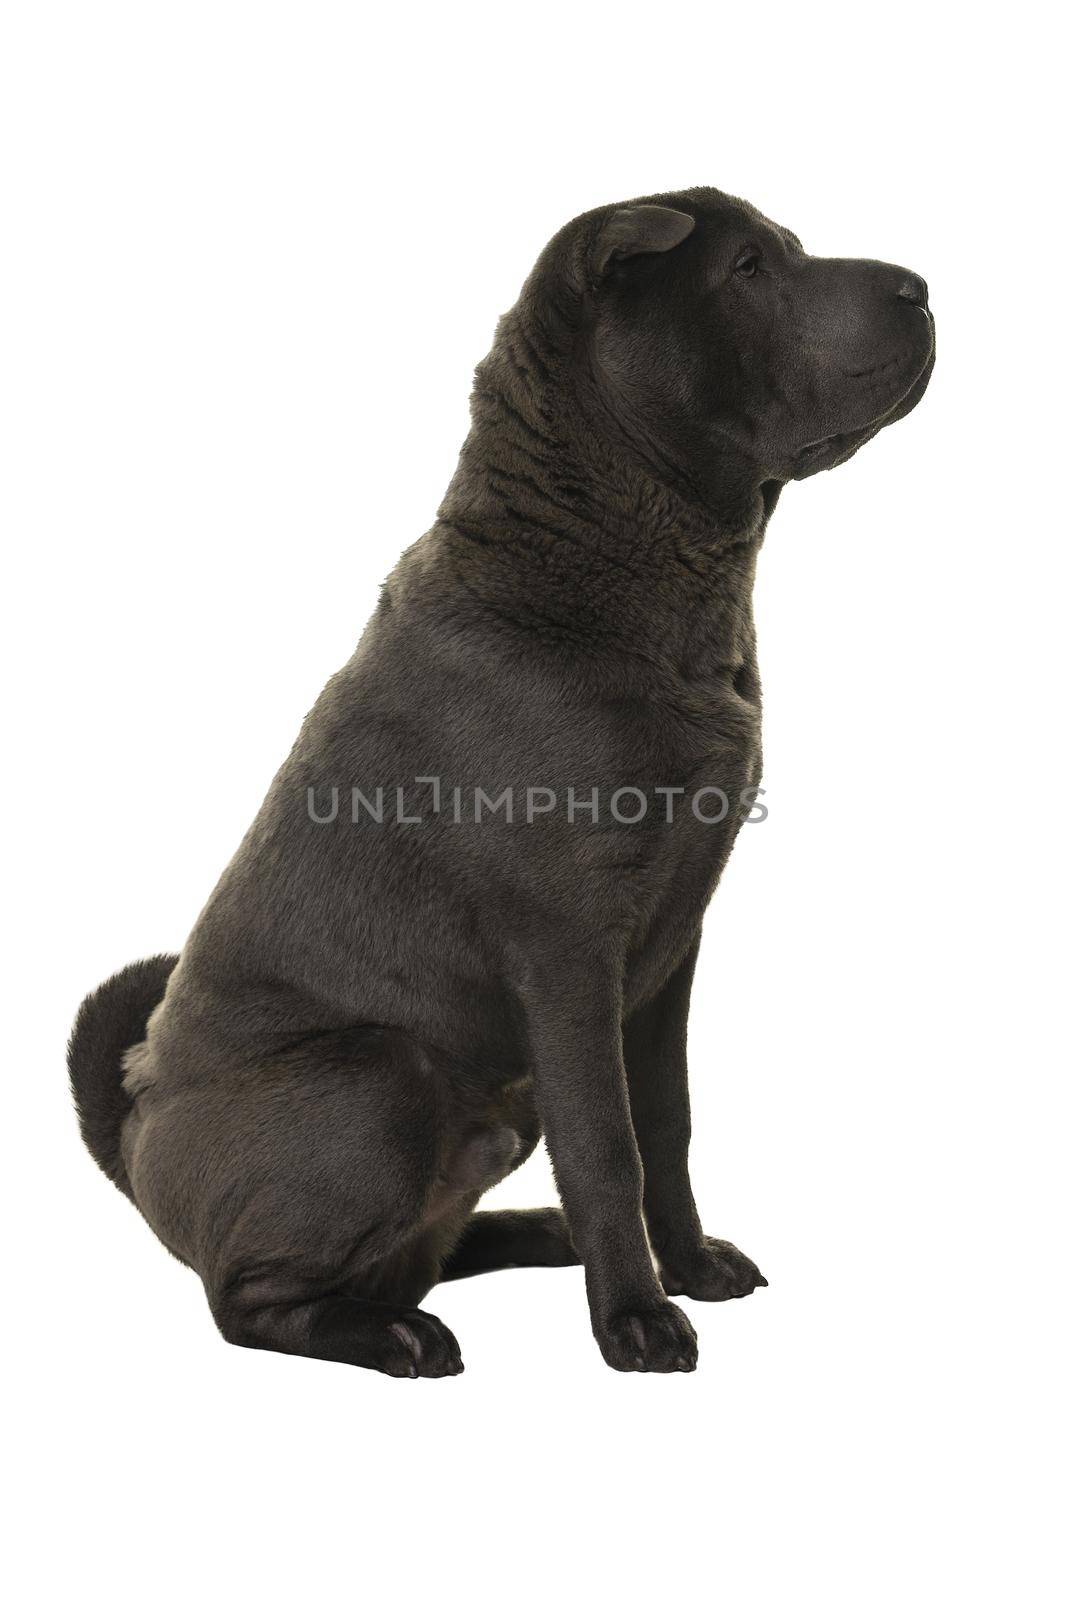 Sitting grey Shar Pei dog looking away isolated on white background